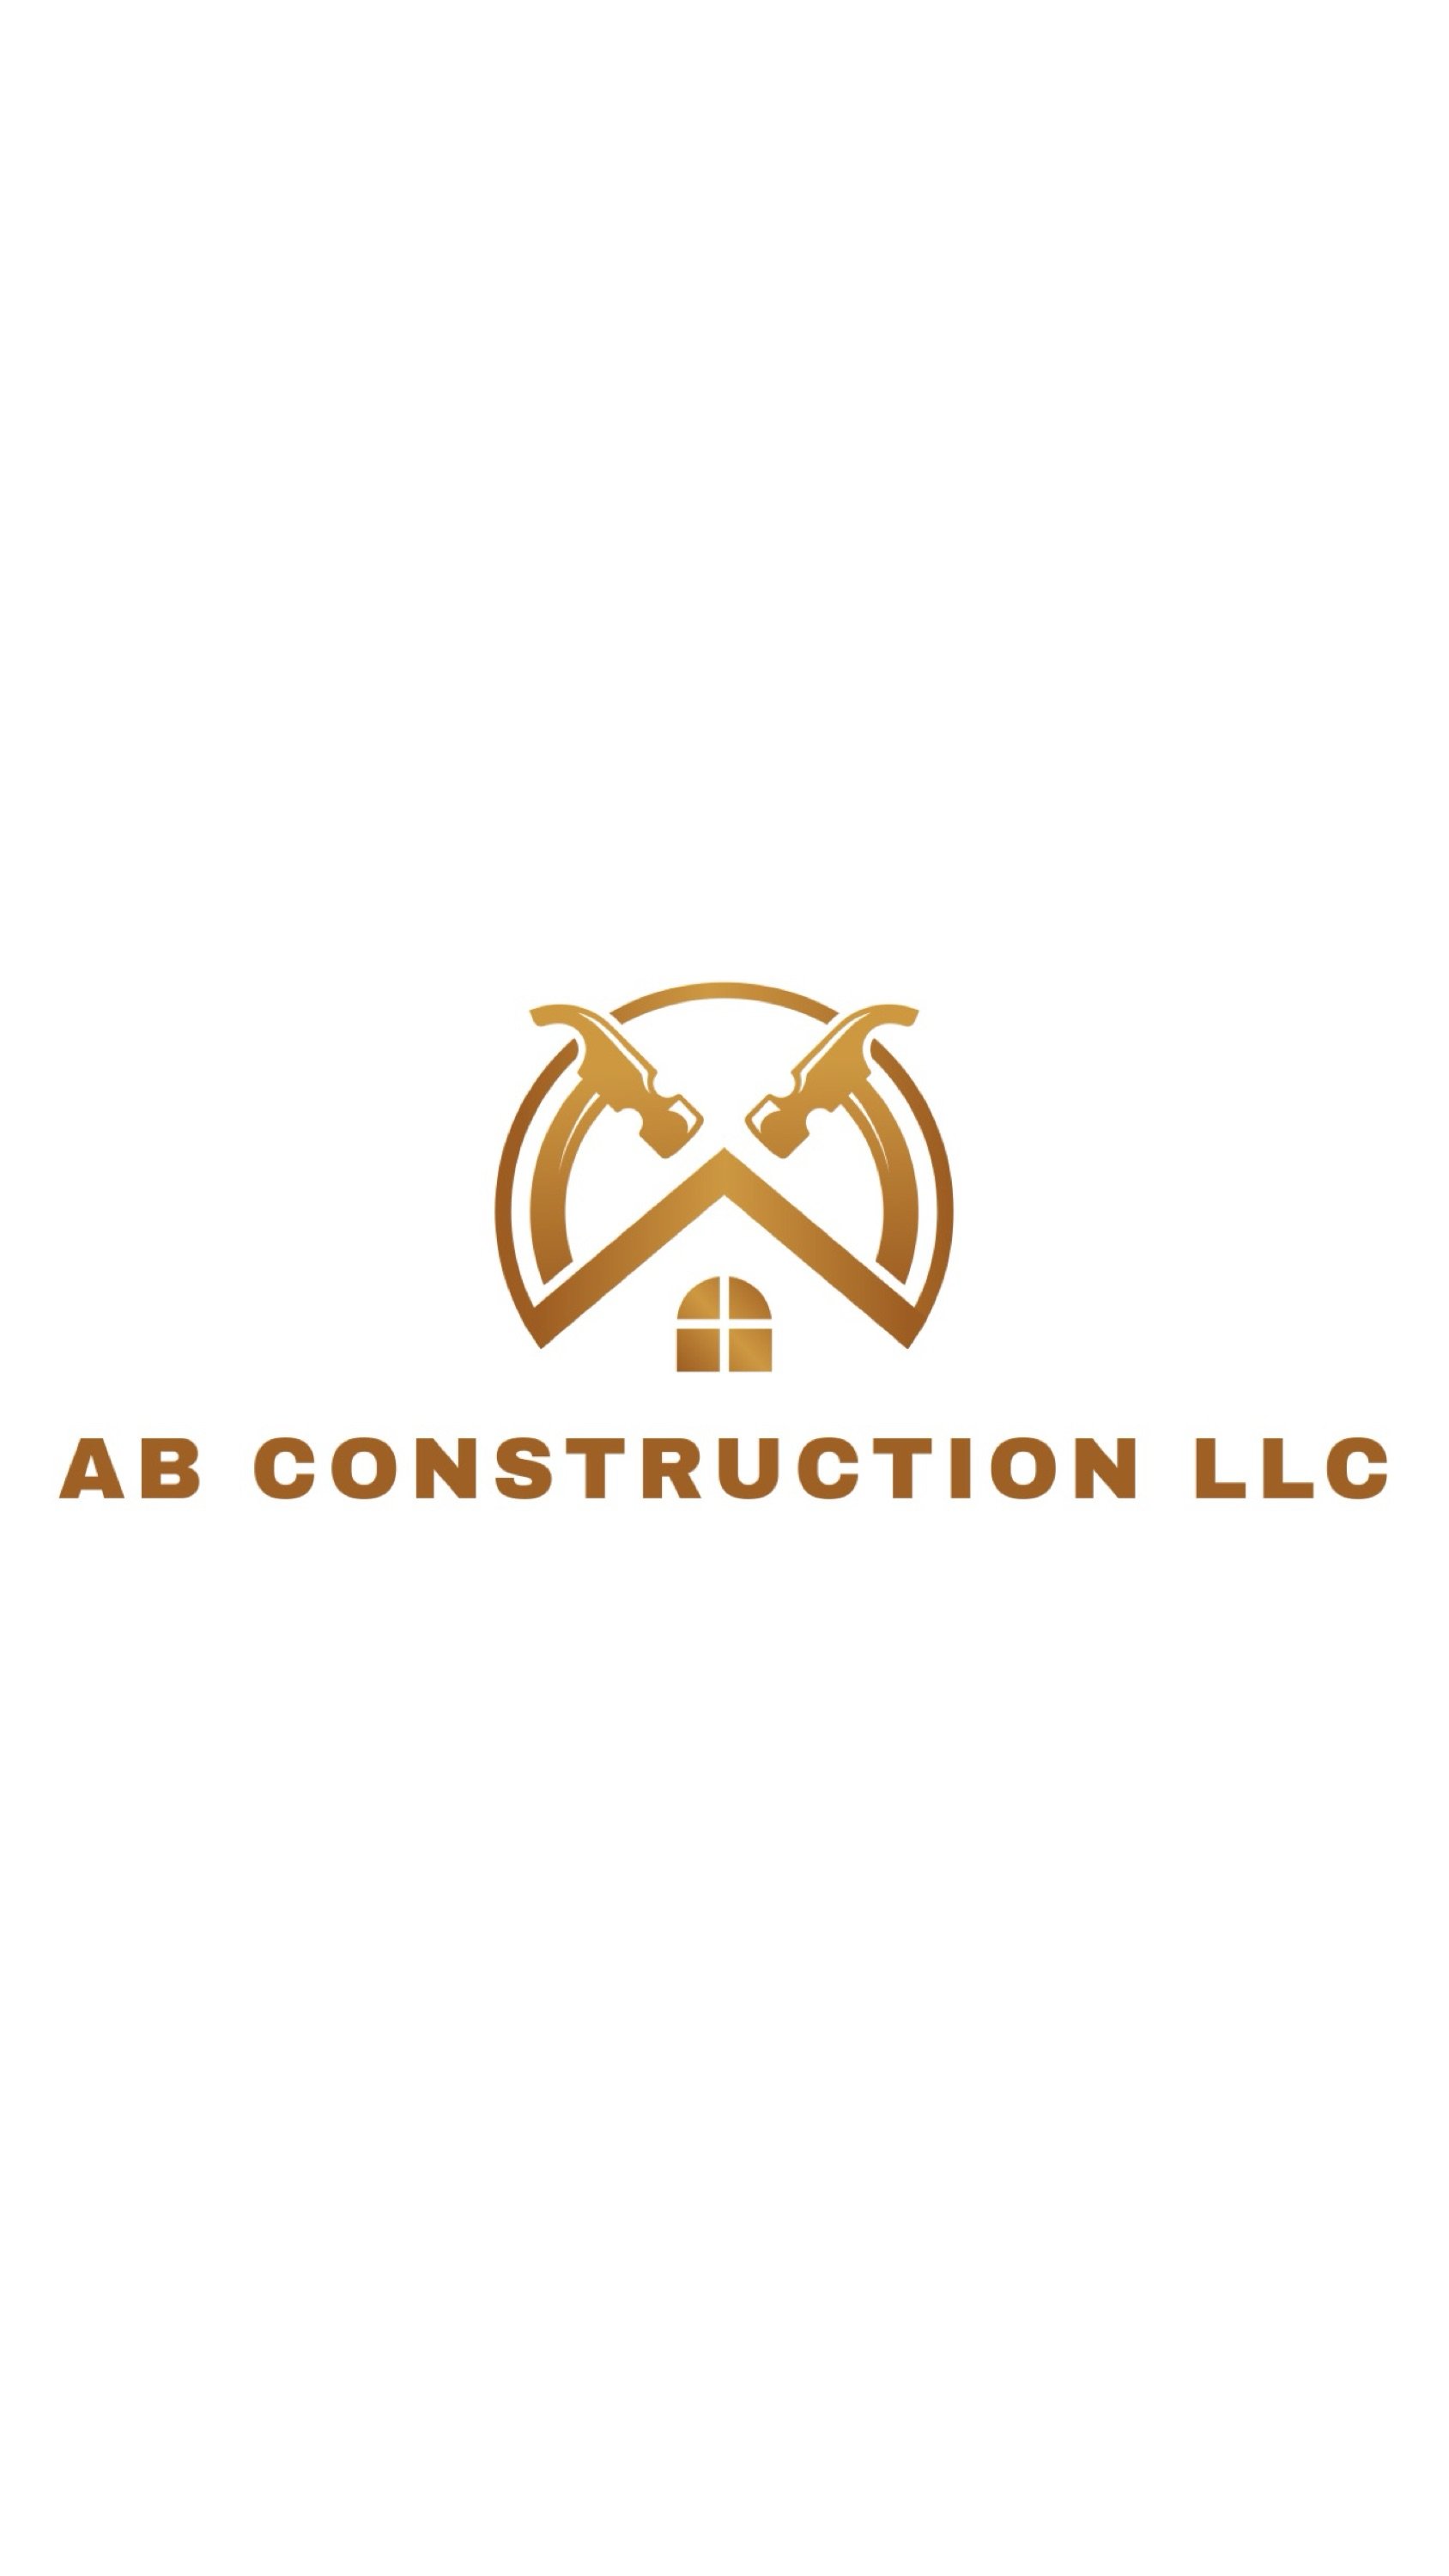 AB CONSTRUCTION LLC Logo